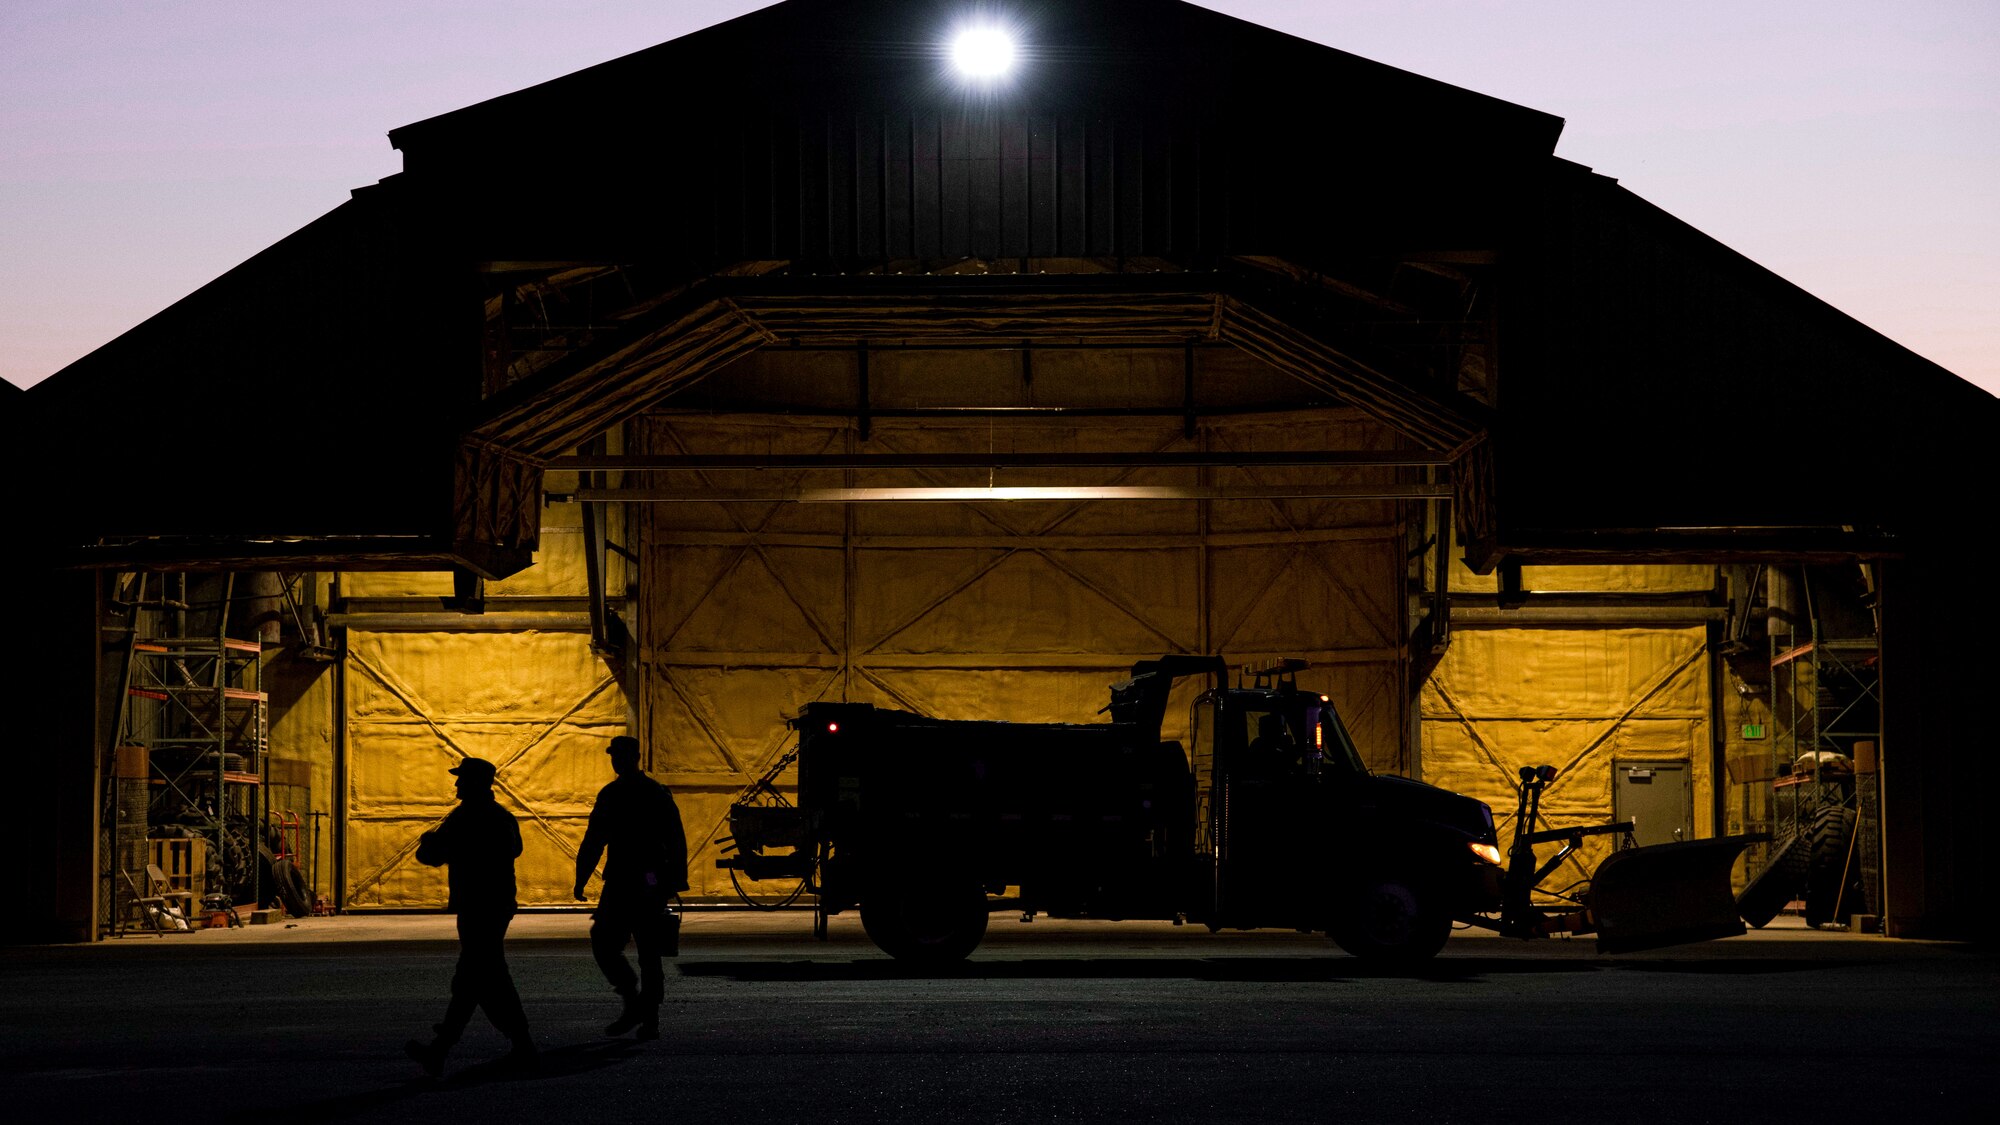 Airmen walk in front of barn at night.